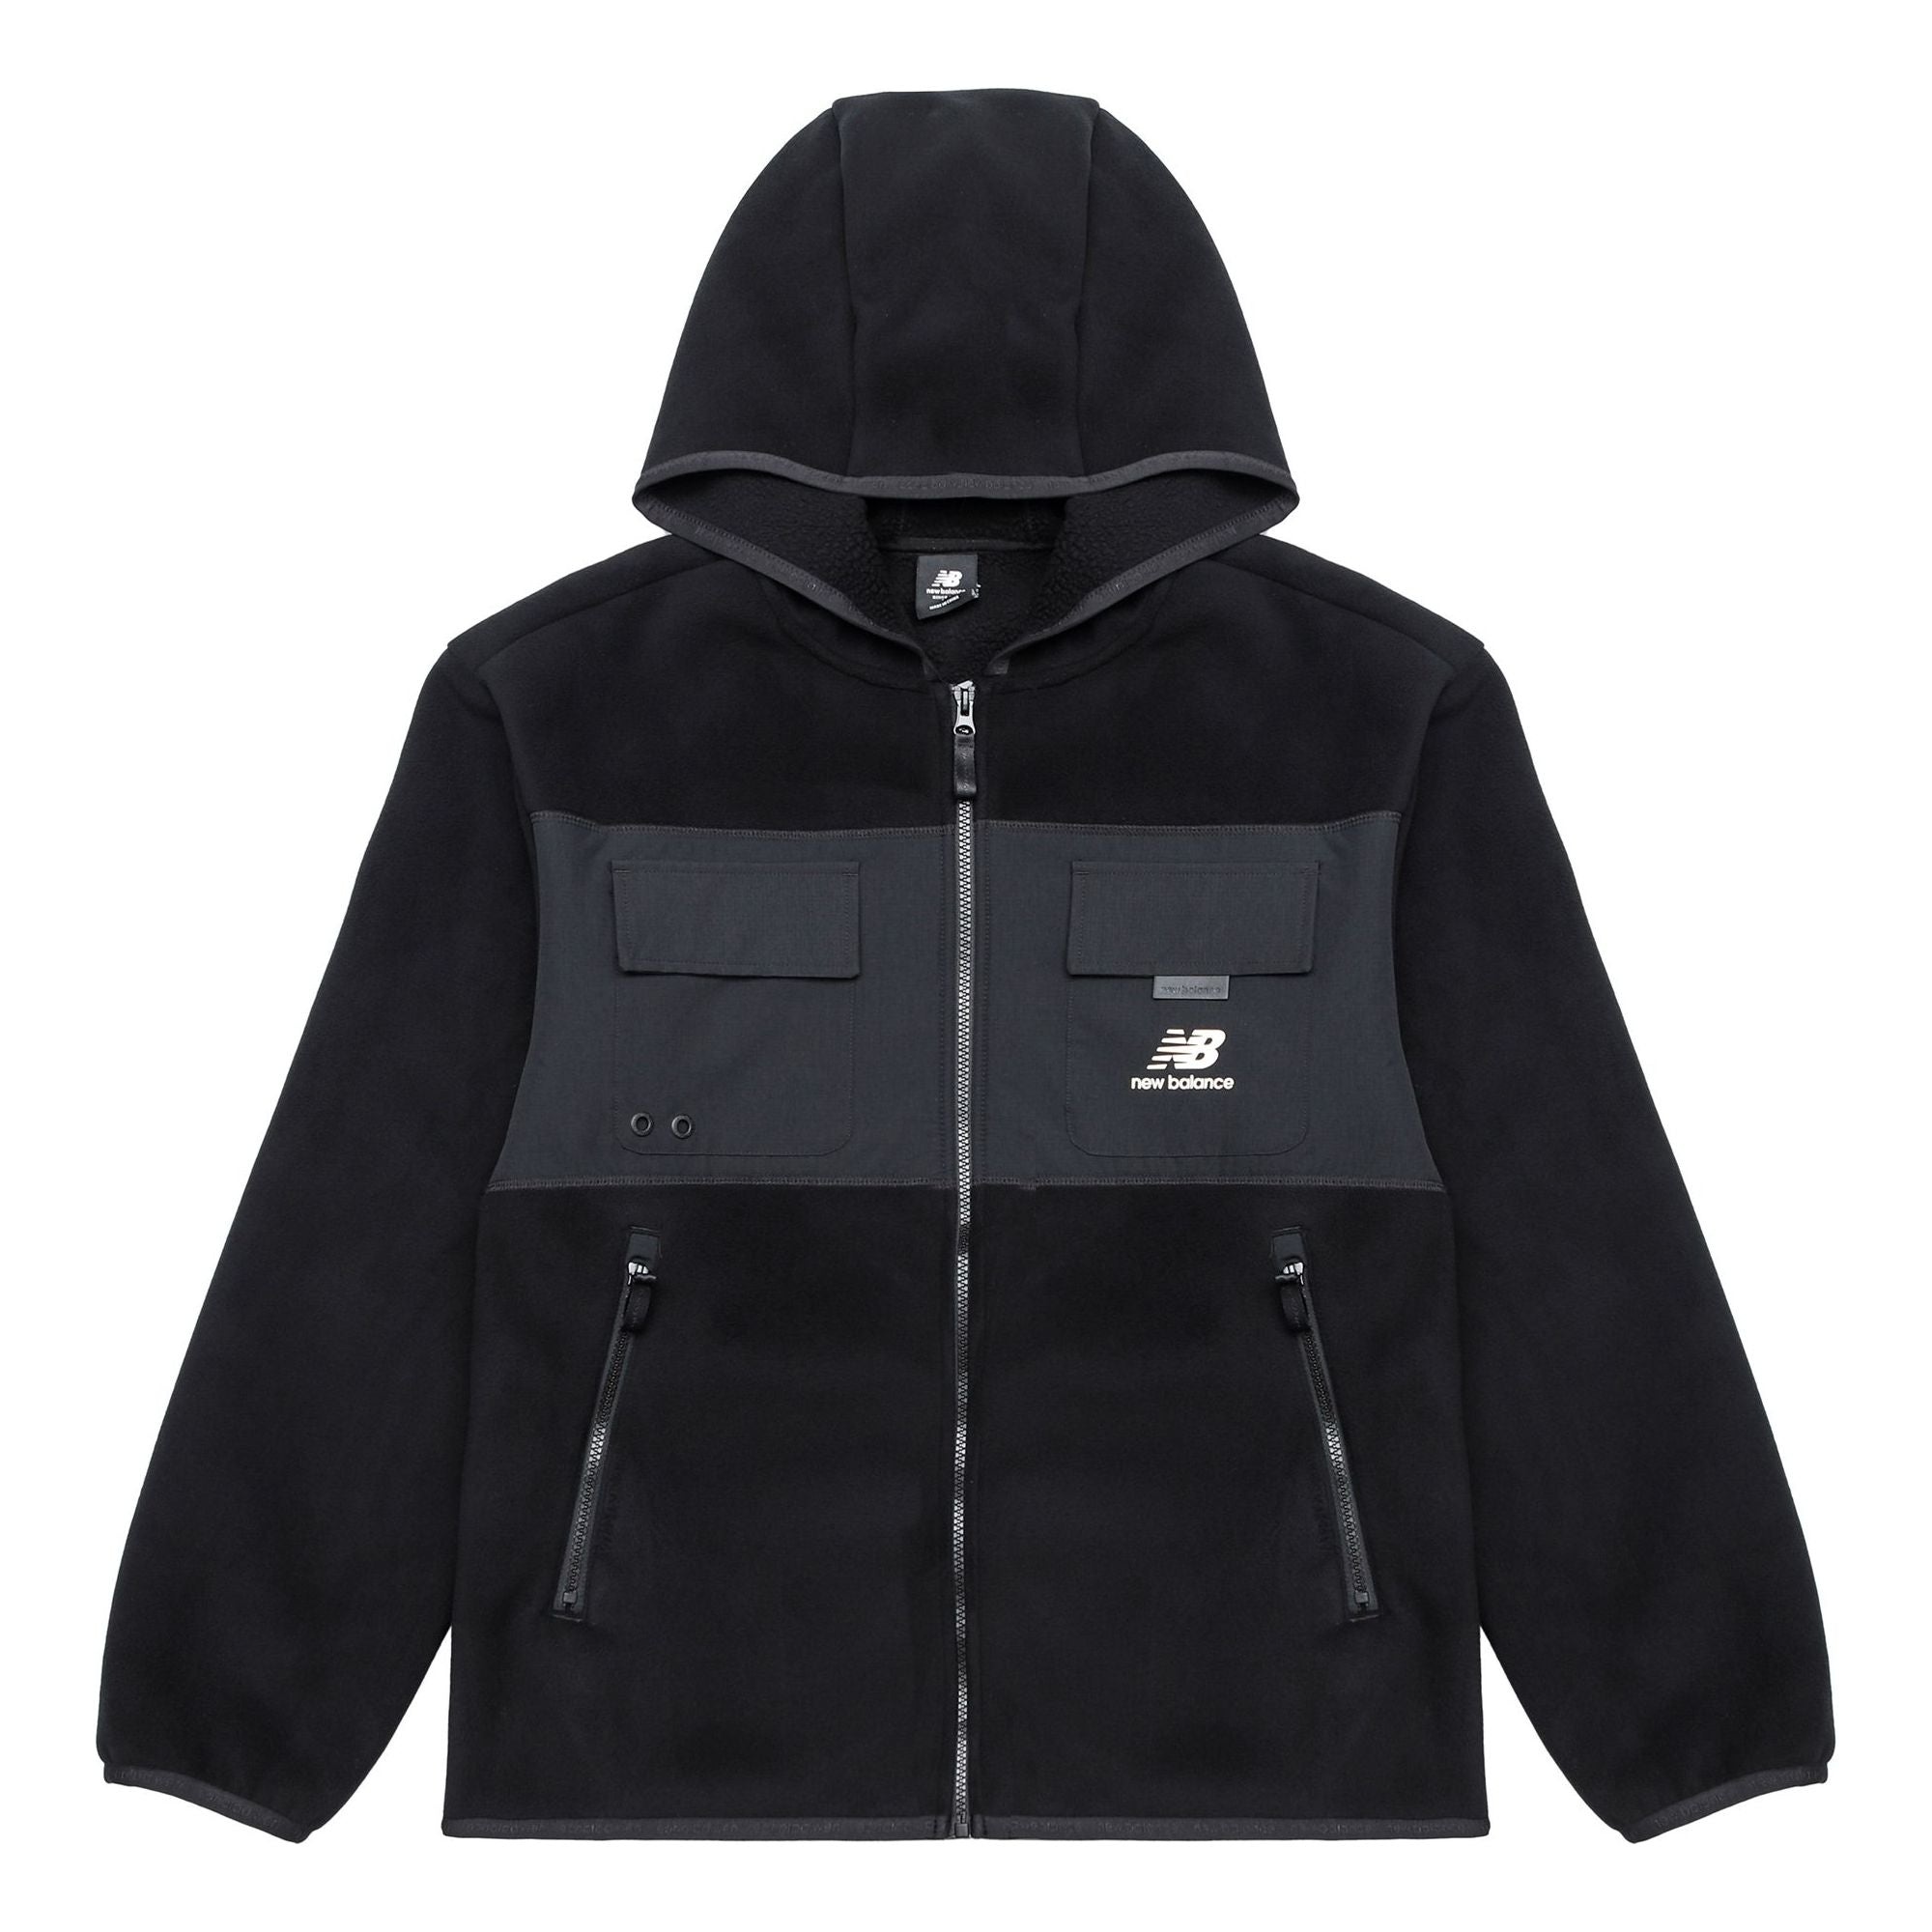 New Balance Alphabet Splicing Contrasting Colors Hooded Jacket 'Black' AMJ13382-BK - 1